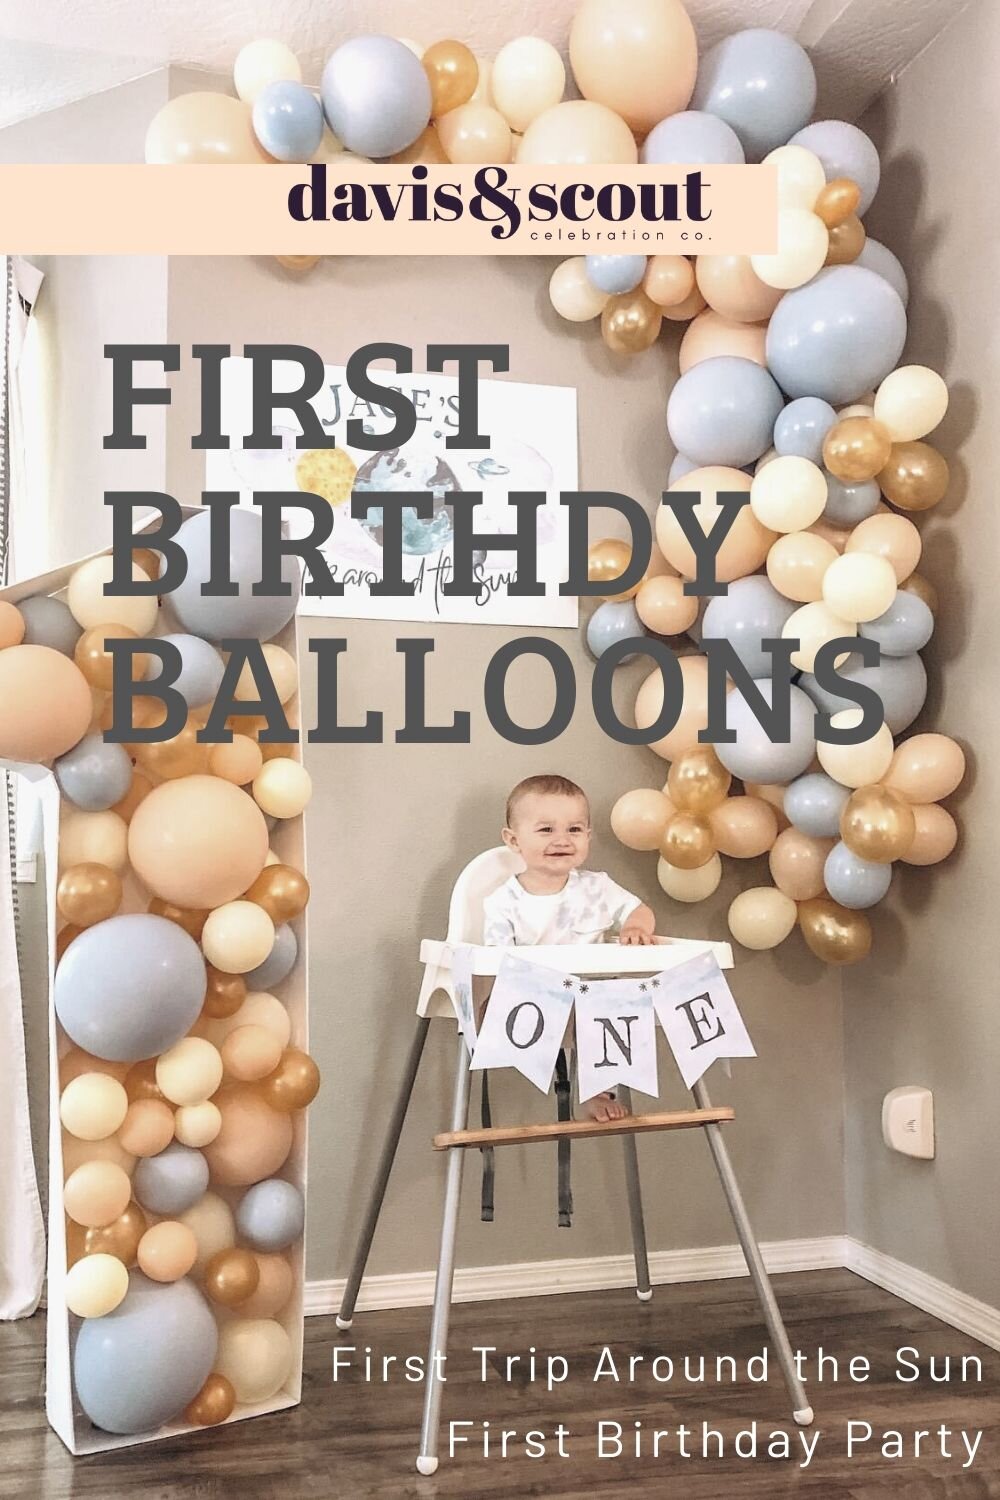 FIRST BIRTHDY BALLOONS.jpg